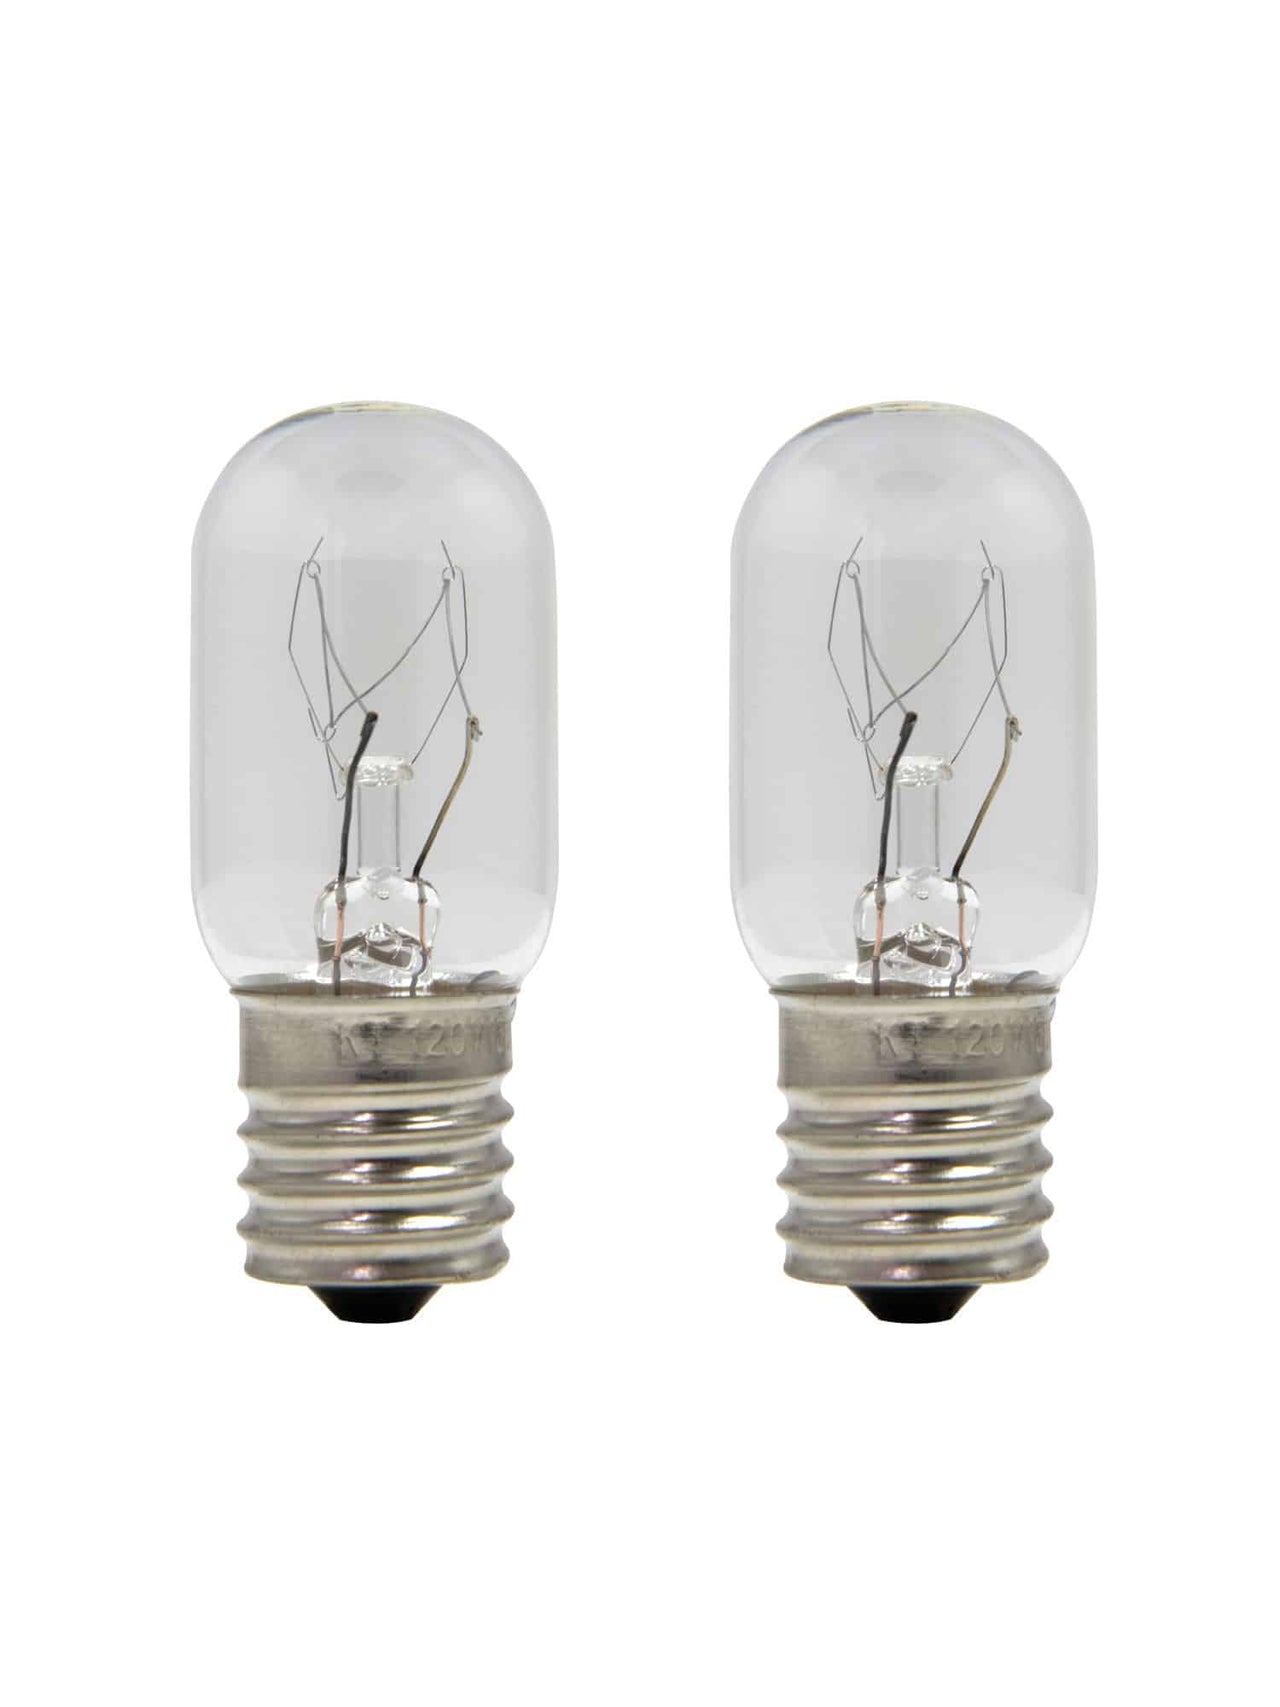 Original Lava Lamp 15 watt Replacement Bulb